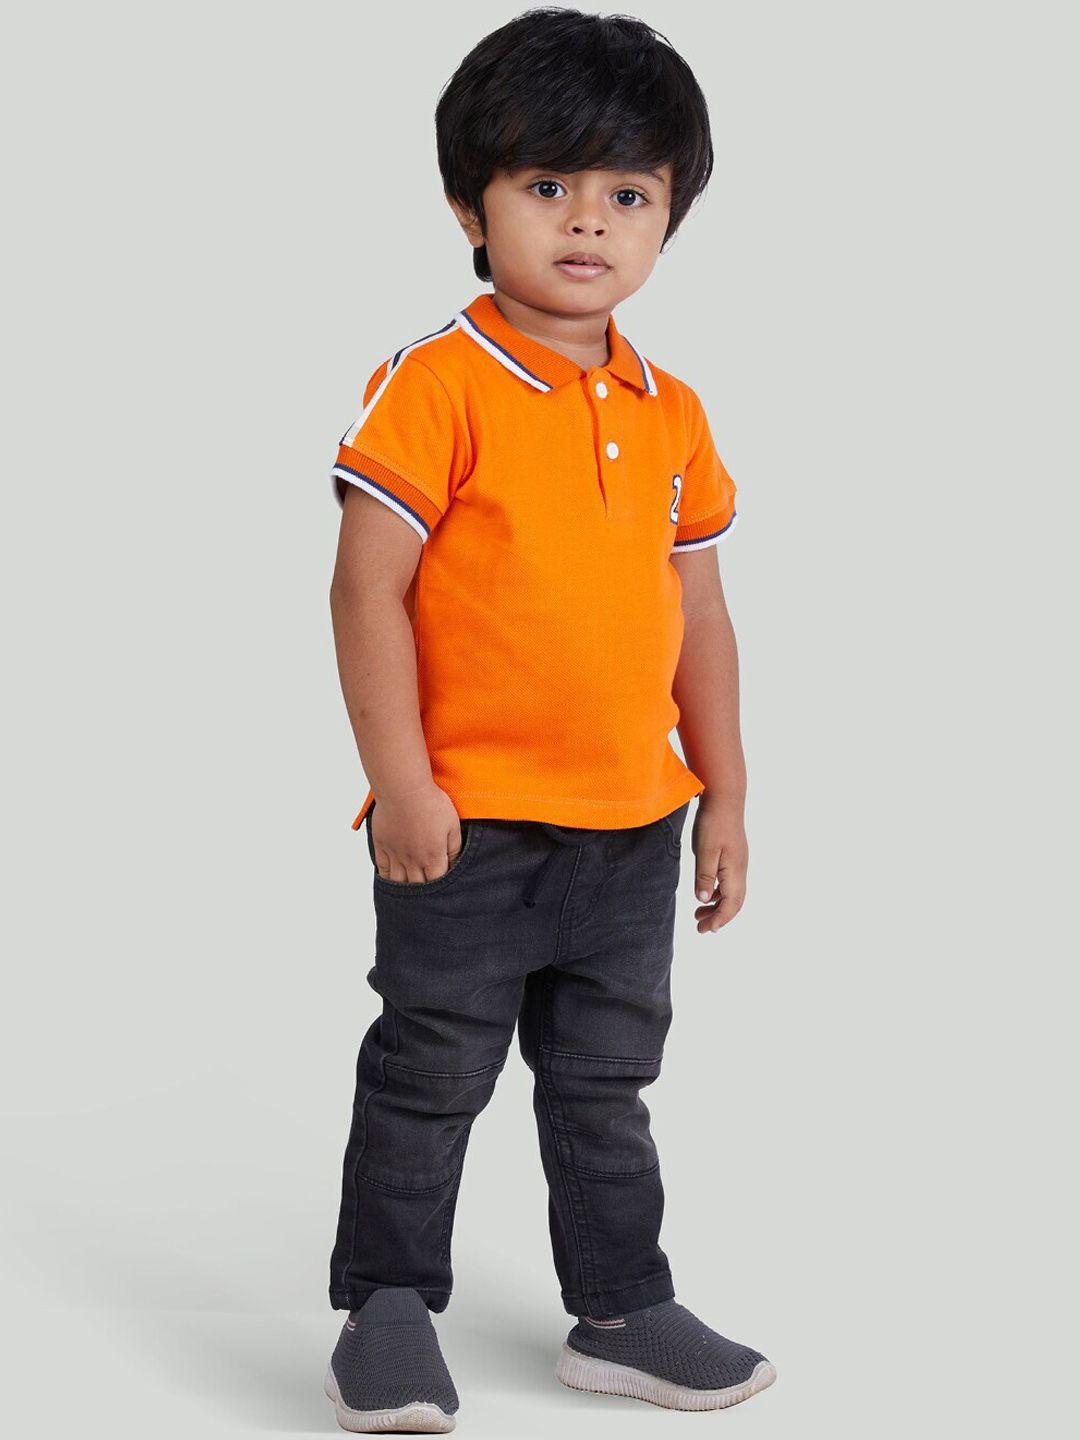 zalio boys orange & grey pure cotton t-shirt with denim jeans